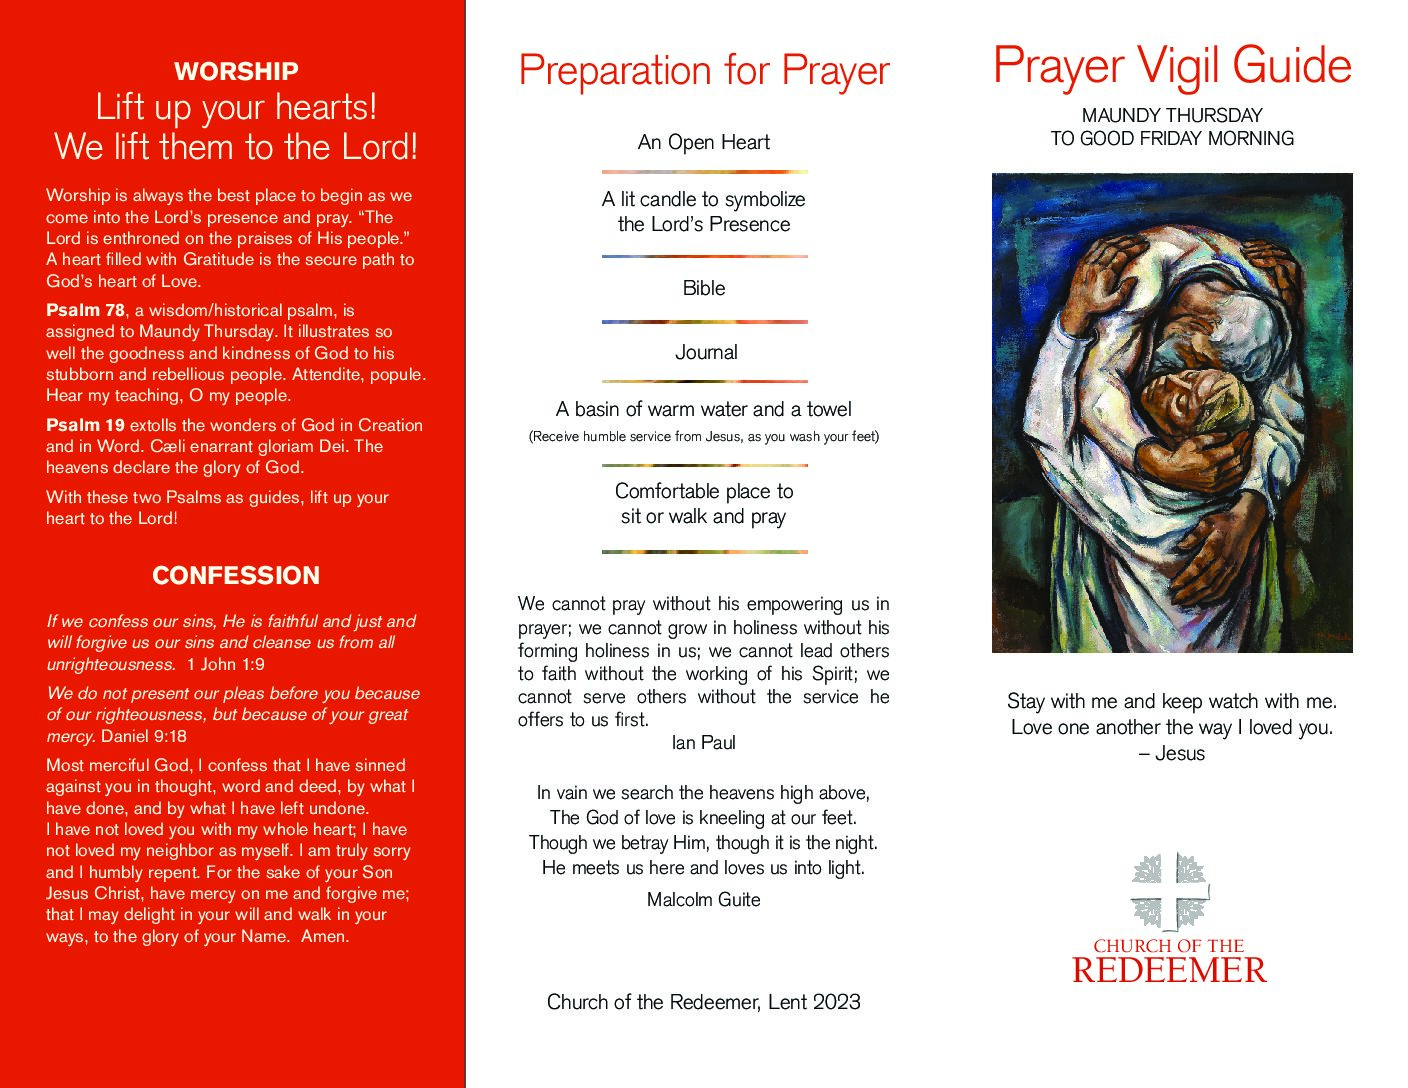 Prayer Vigil Guide